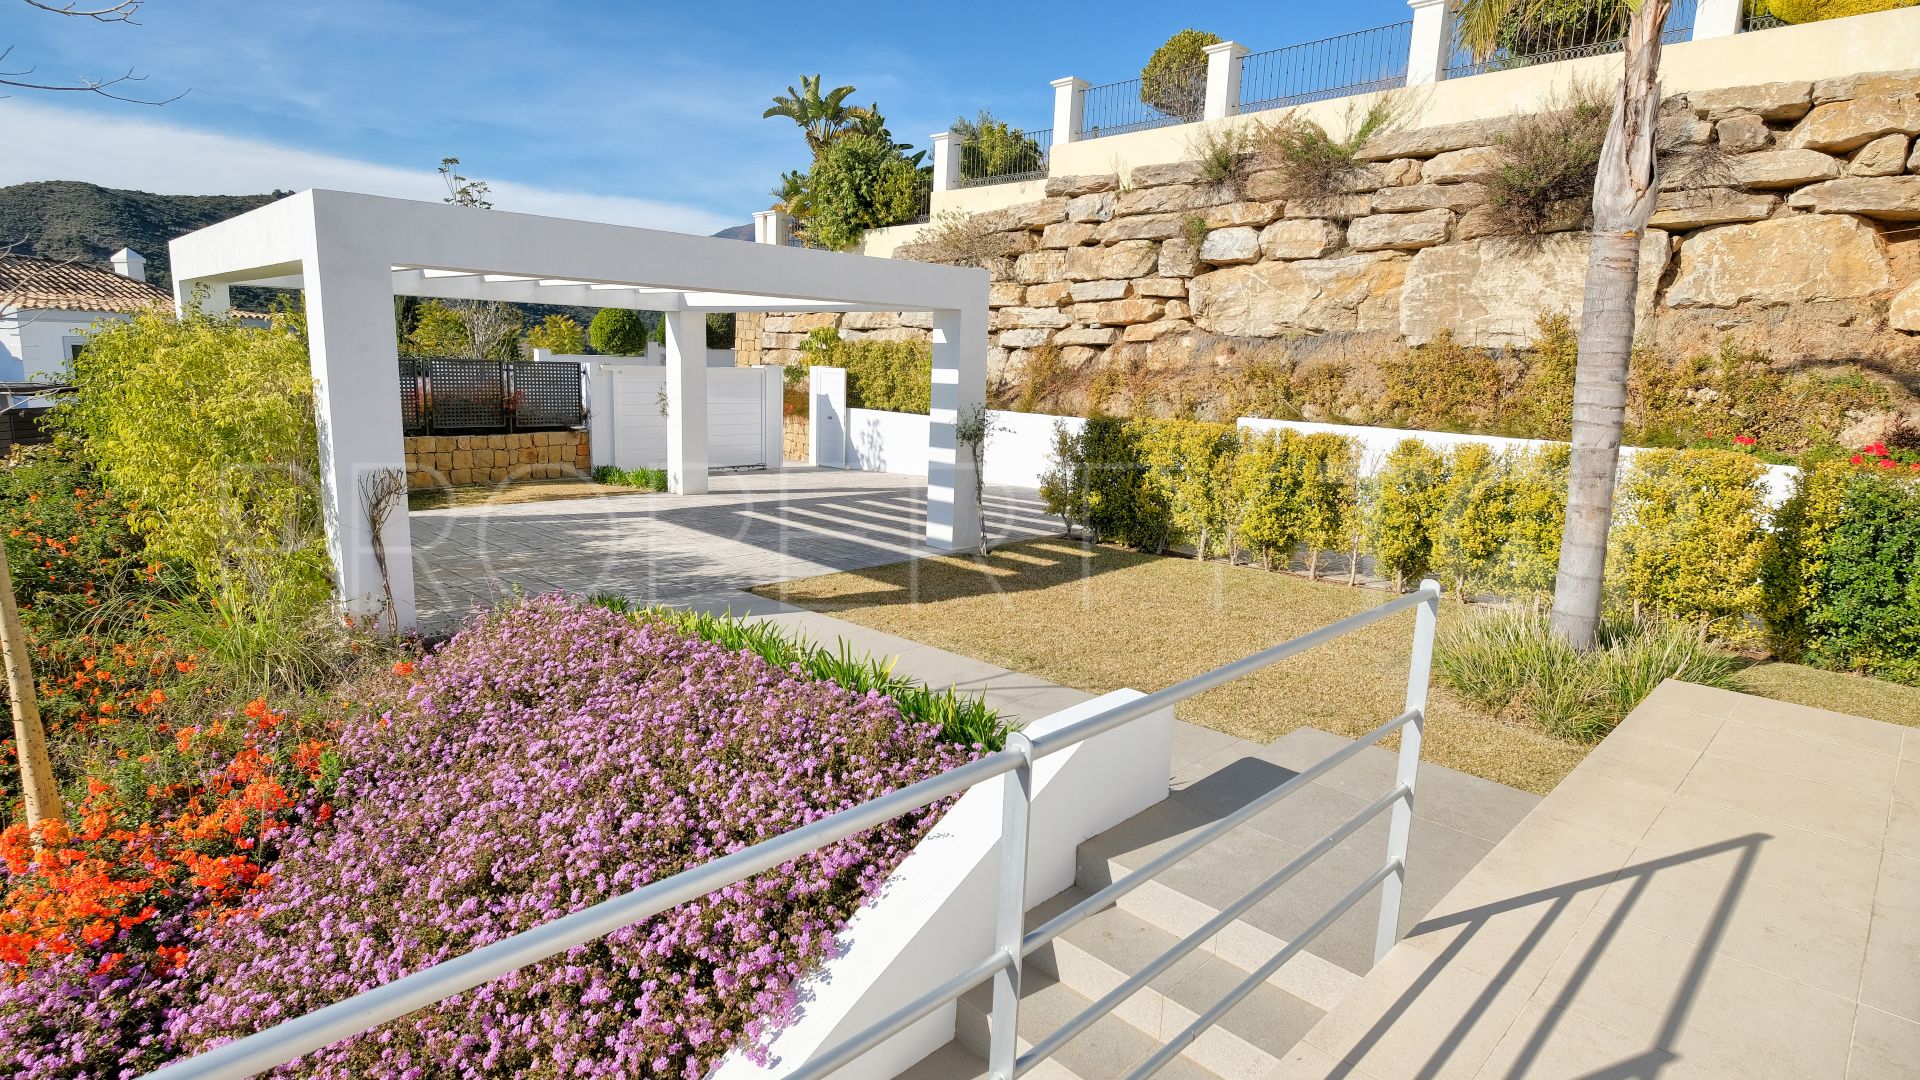 For sale villa in Puerto del Capitan with 4 bedrooms